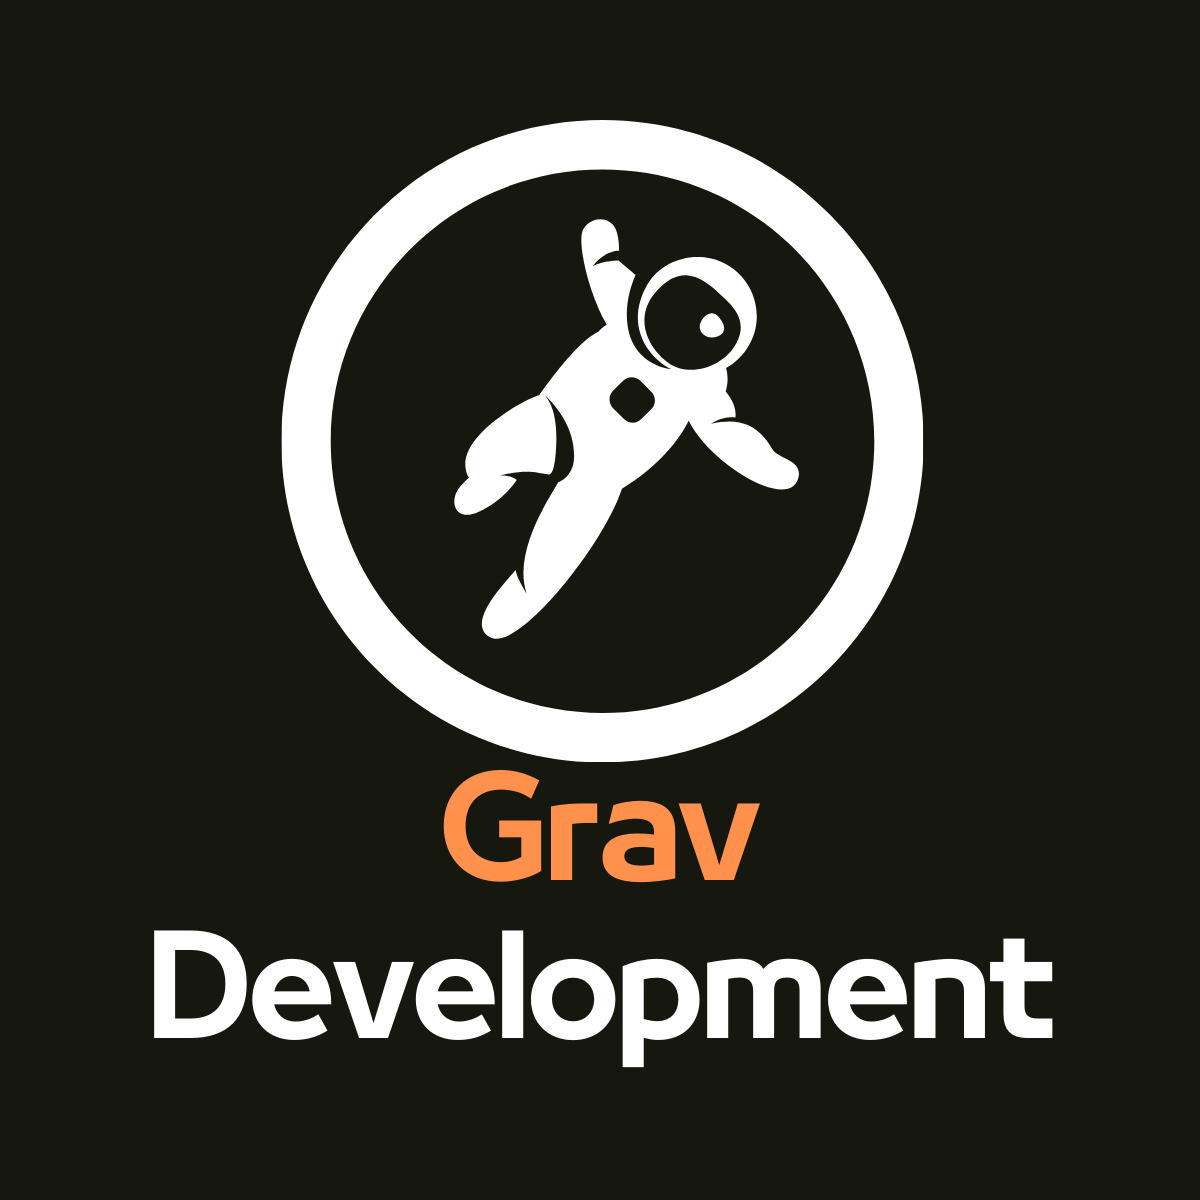 Grav Development Company in India